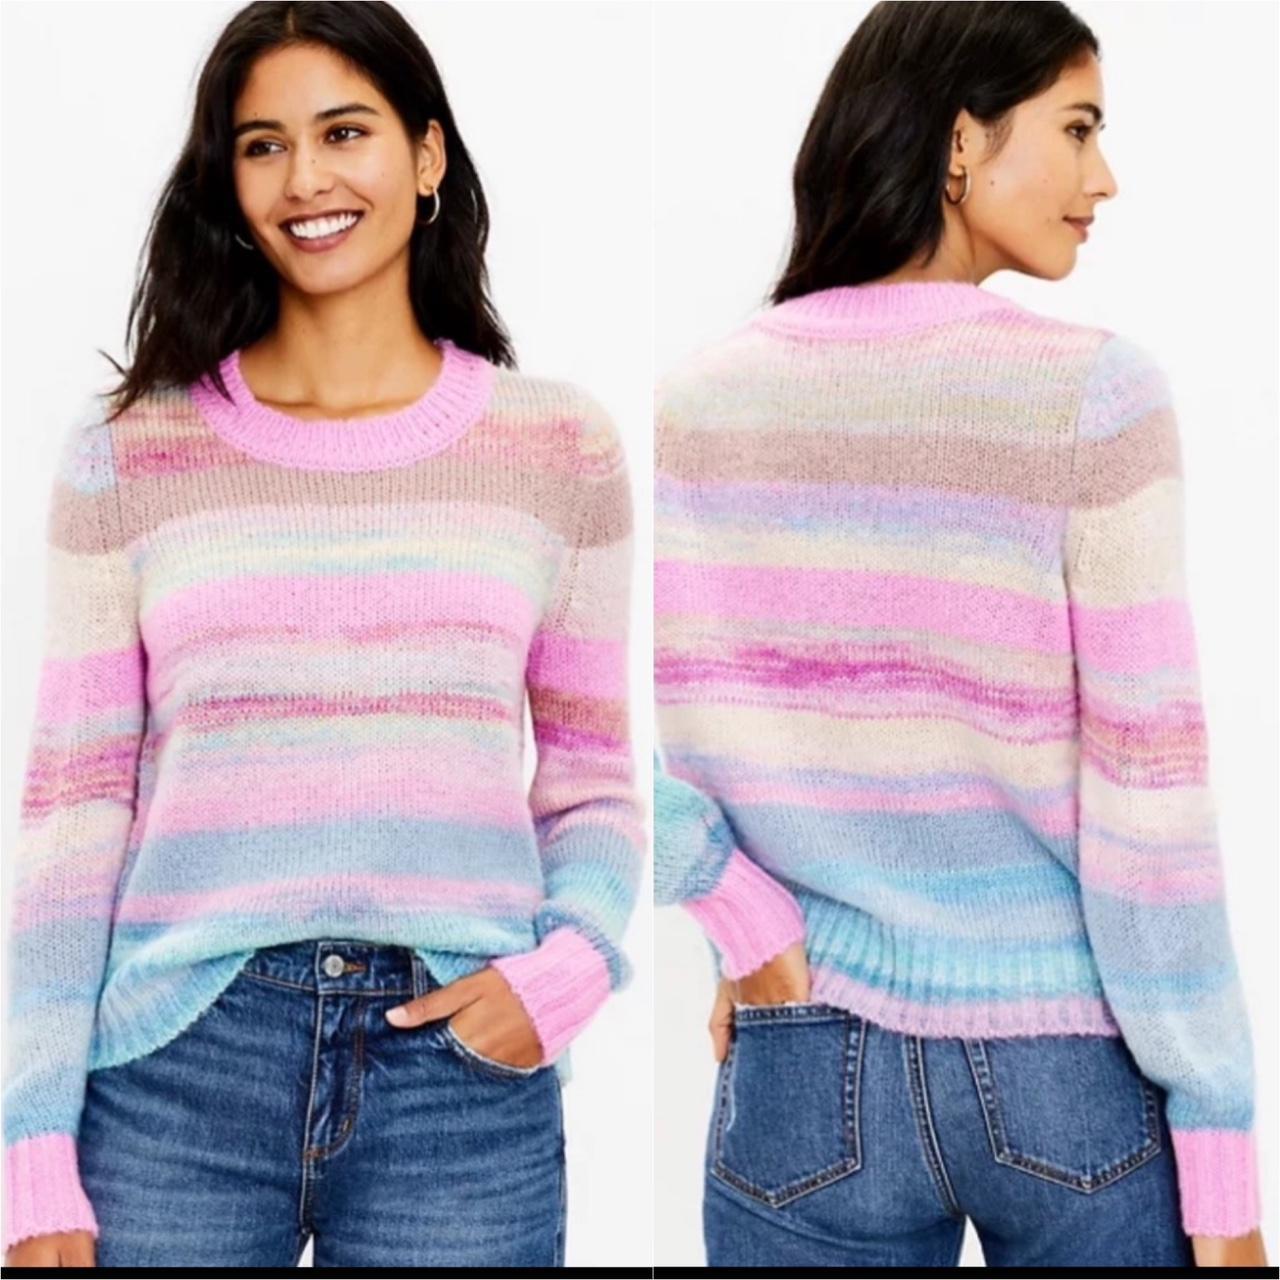 LOFT Rainbow Spacedye Knit Sweater $79.50 NWT... - Depop